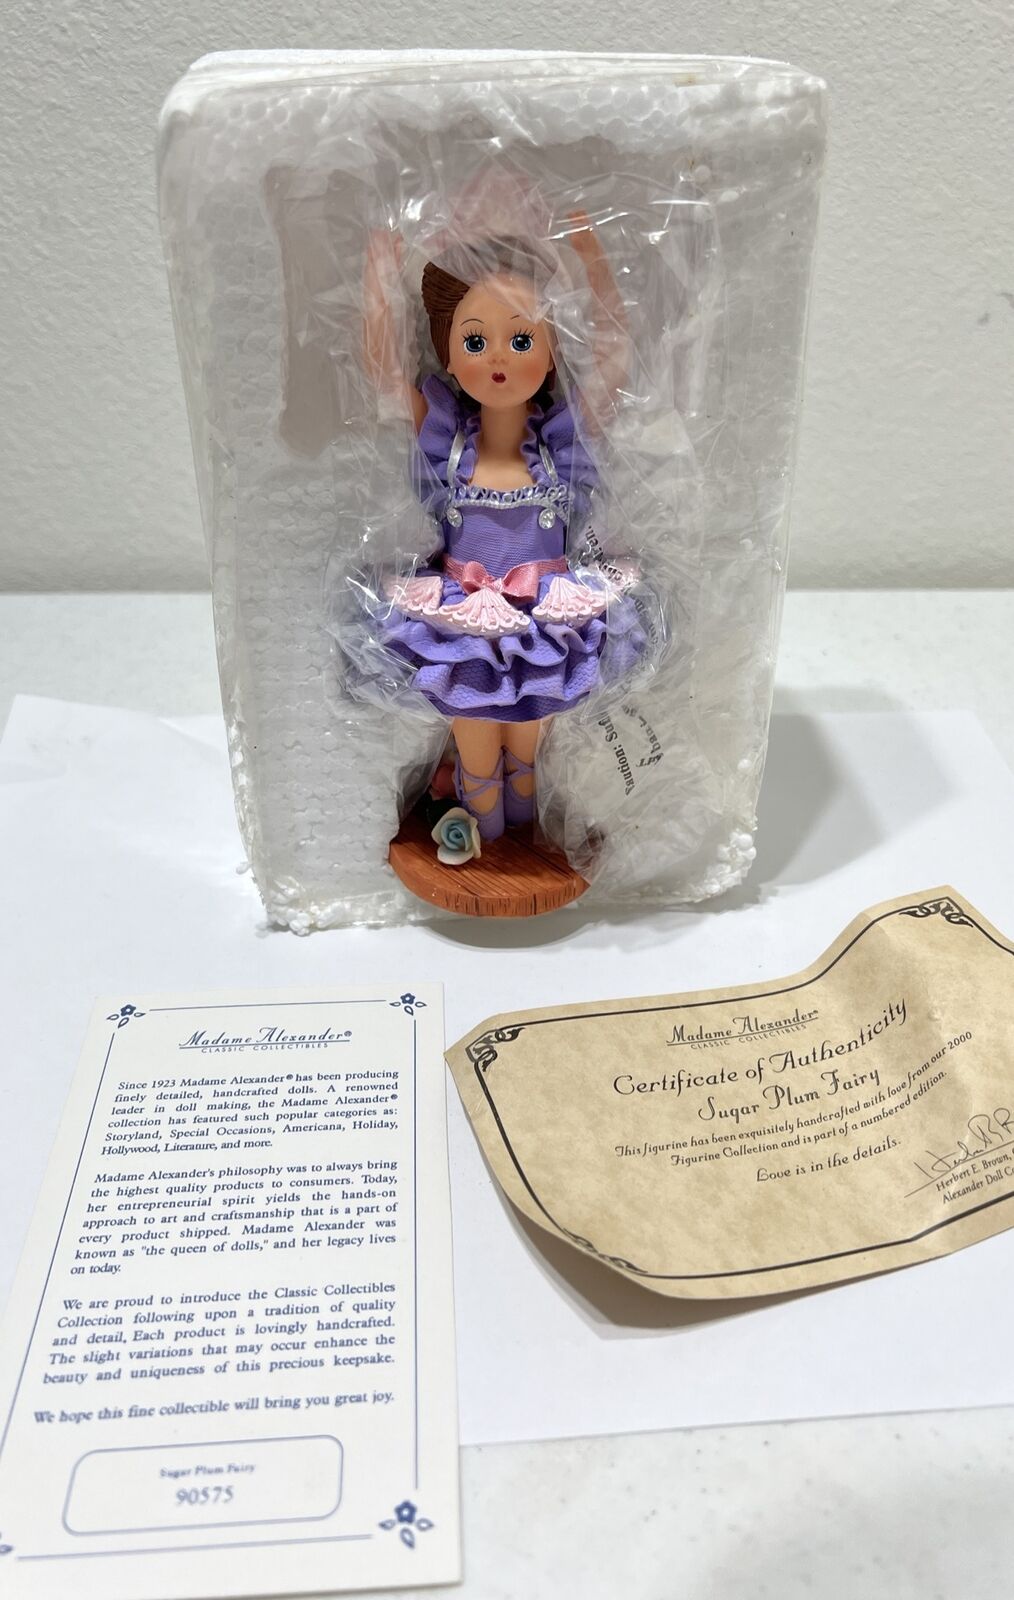 2000 Madame Alexander “Sugar Plum Fairy” figurine #90575 Paperwork Original Box